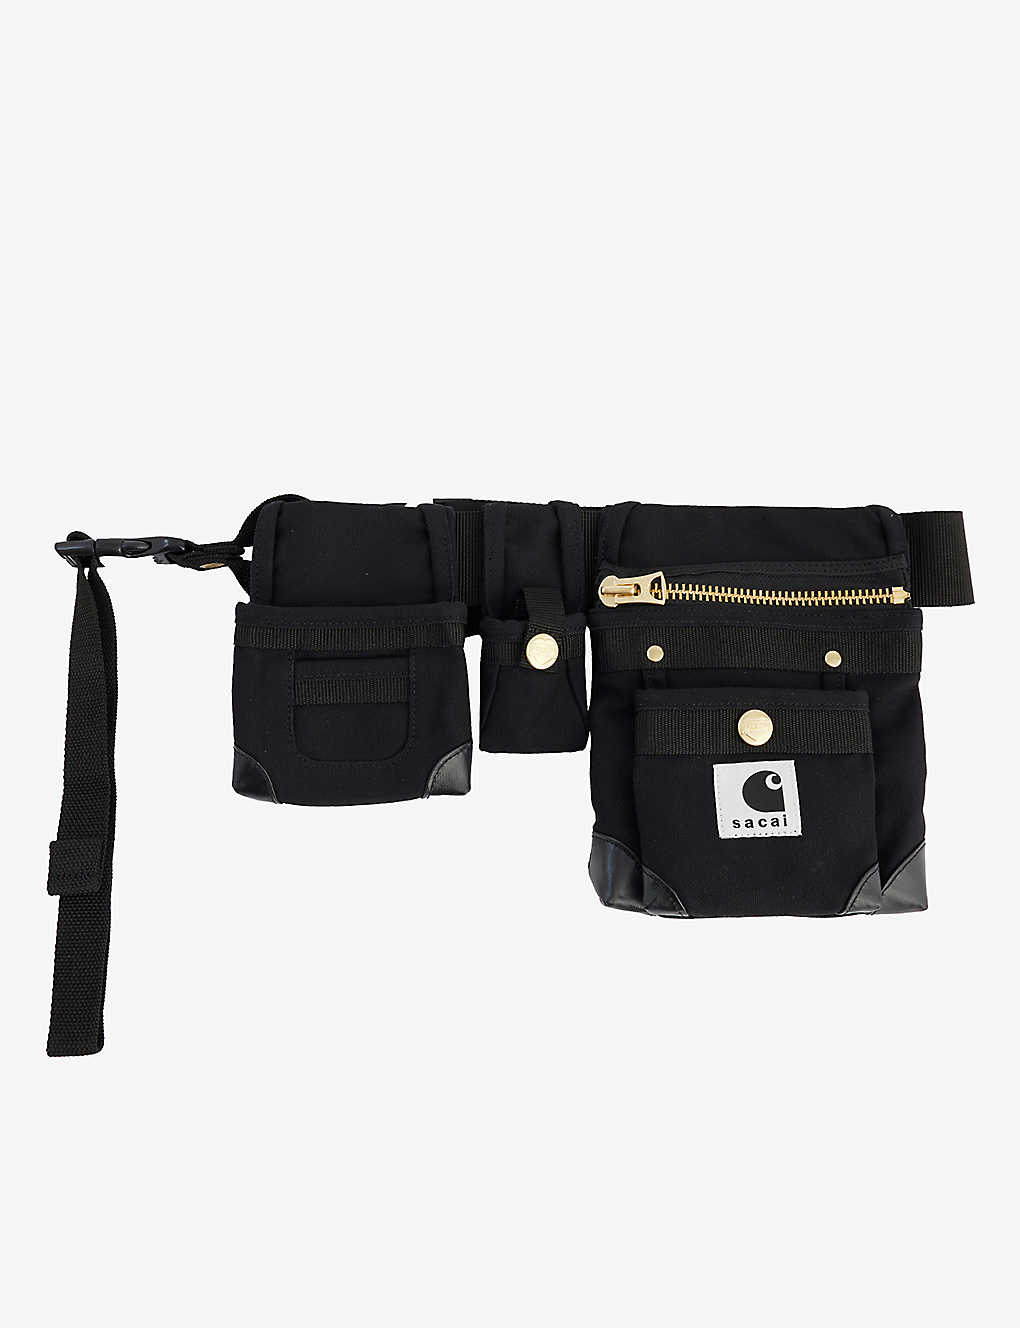 Carhartt WIP Delta Hip Bag in Black